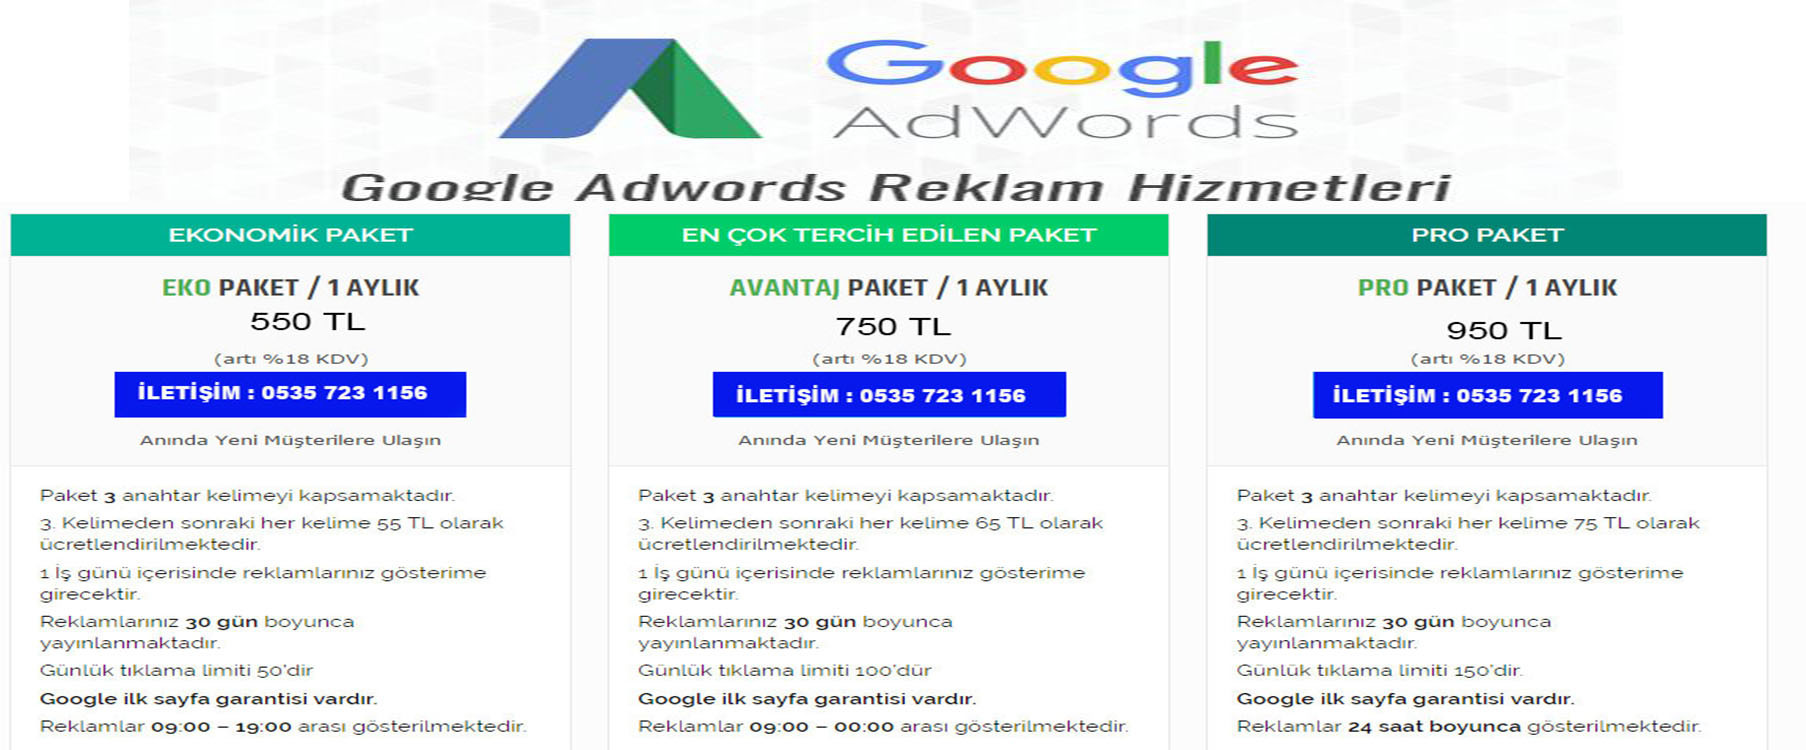 Google Adwords Reklam Hizmeti